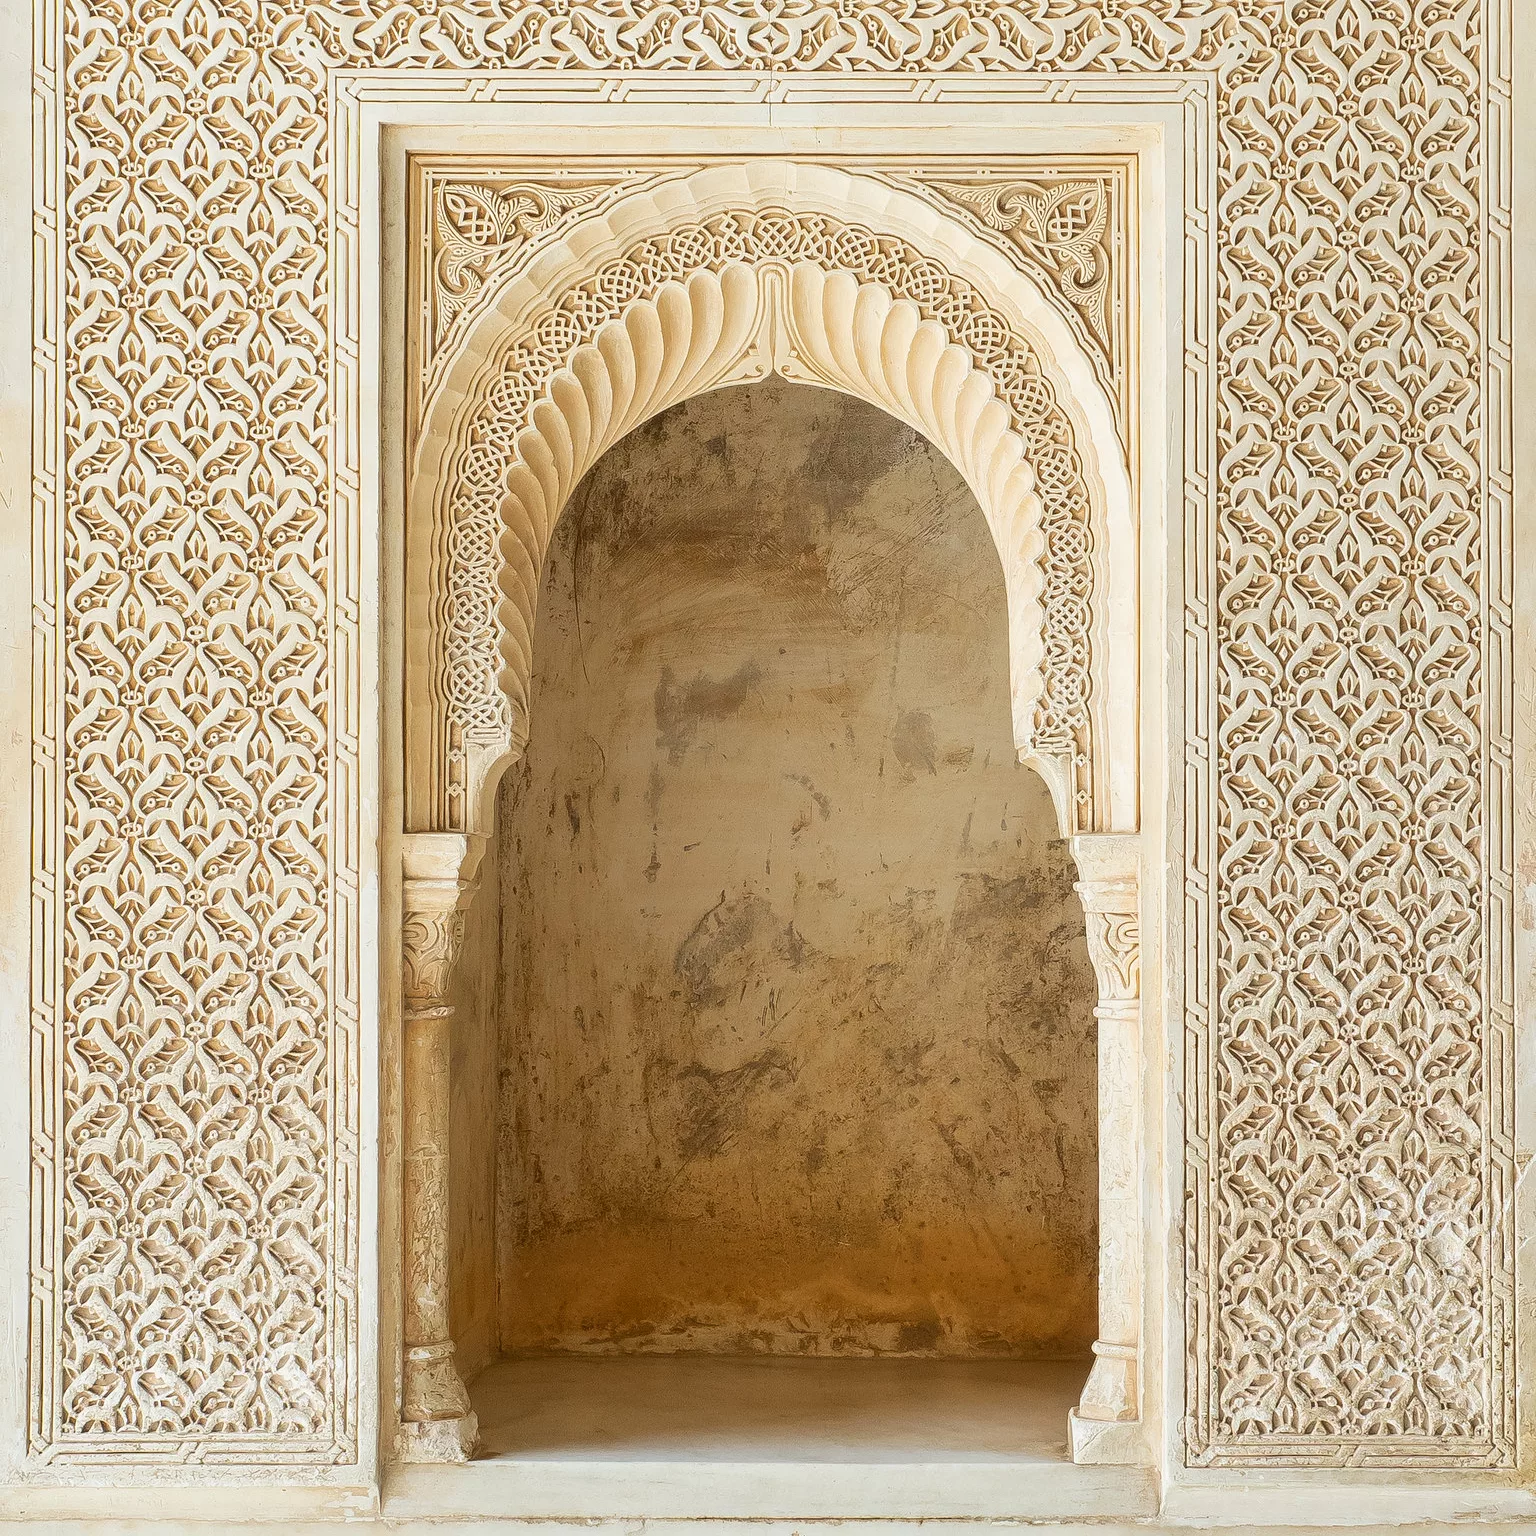 Islamic ornate niche in the Alhambra